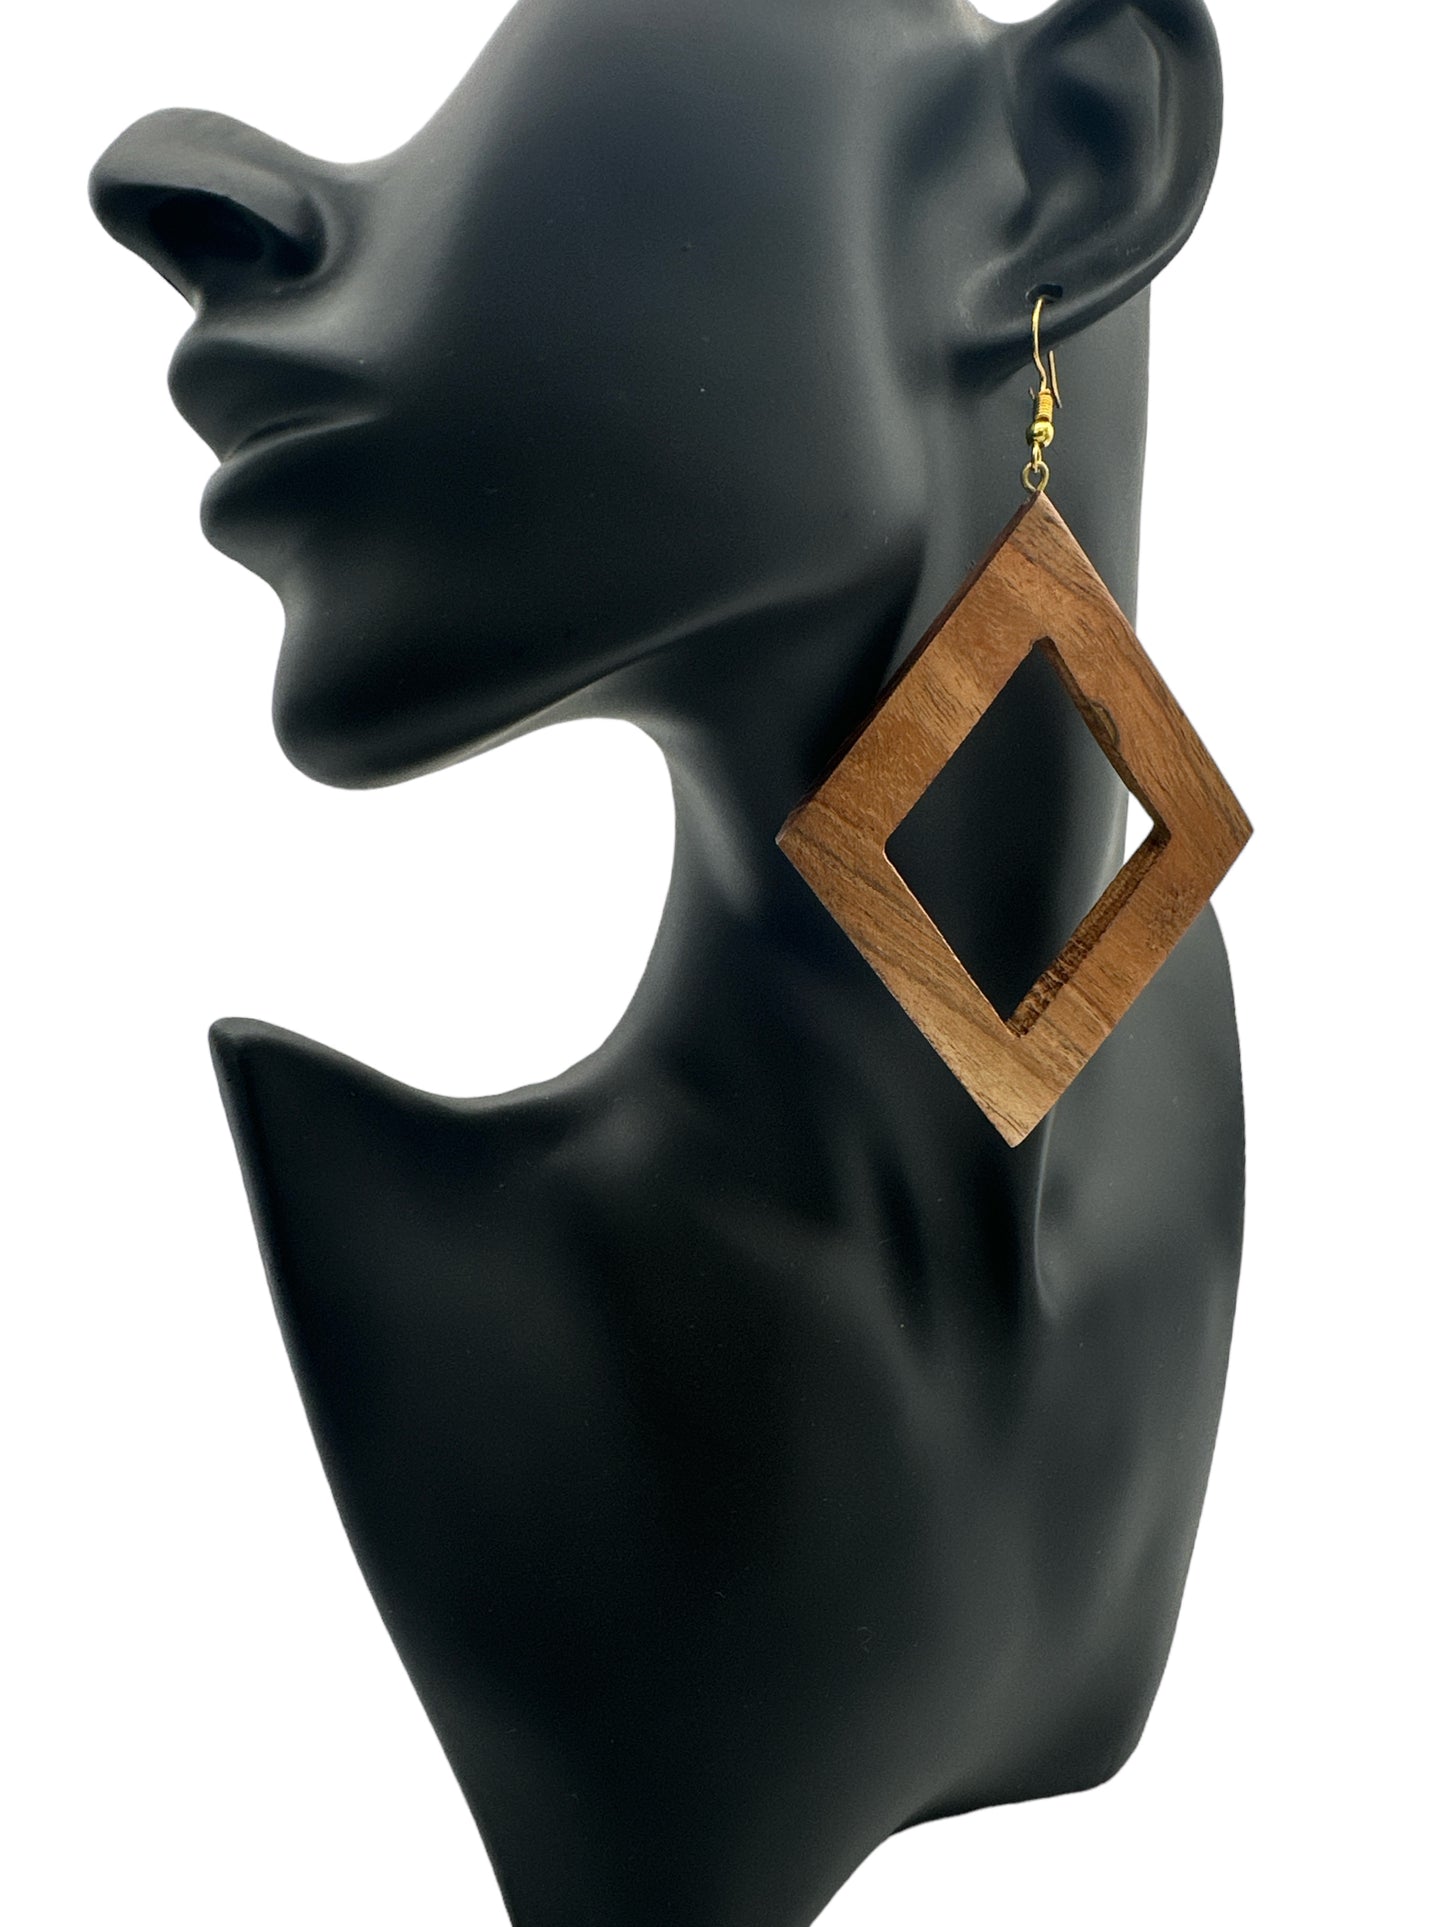 Wooden Rhombus Shaped Ethnic Dangle Statement Earrings